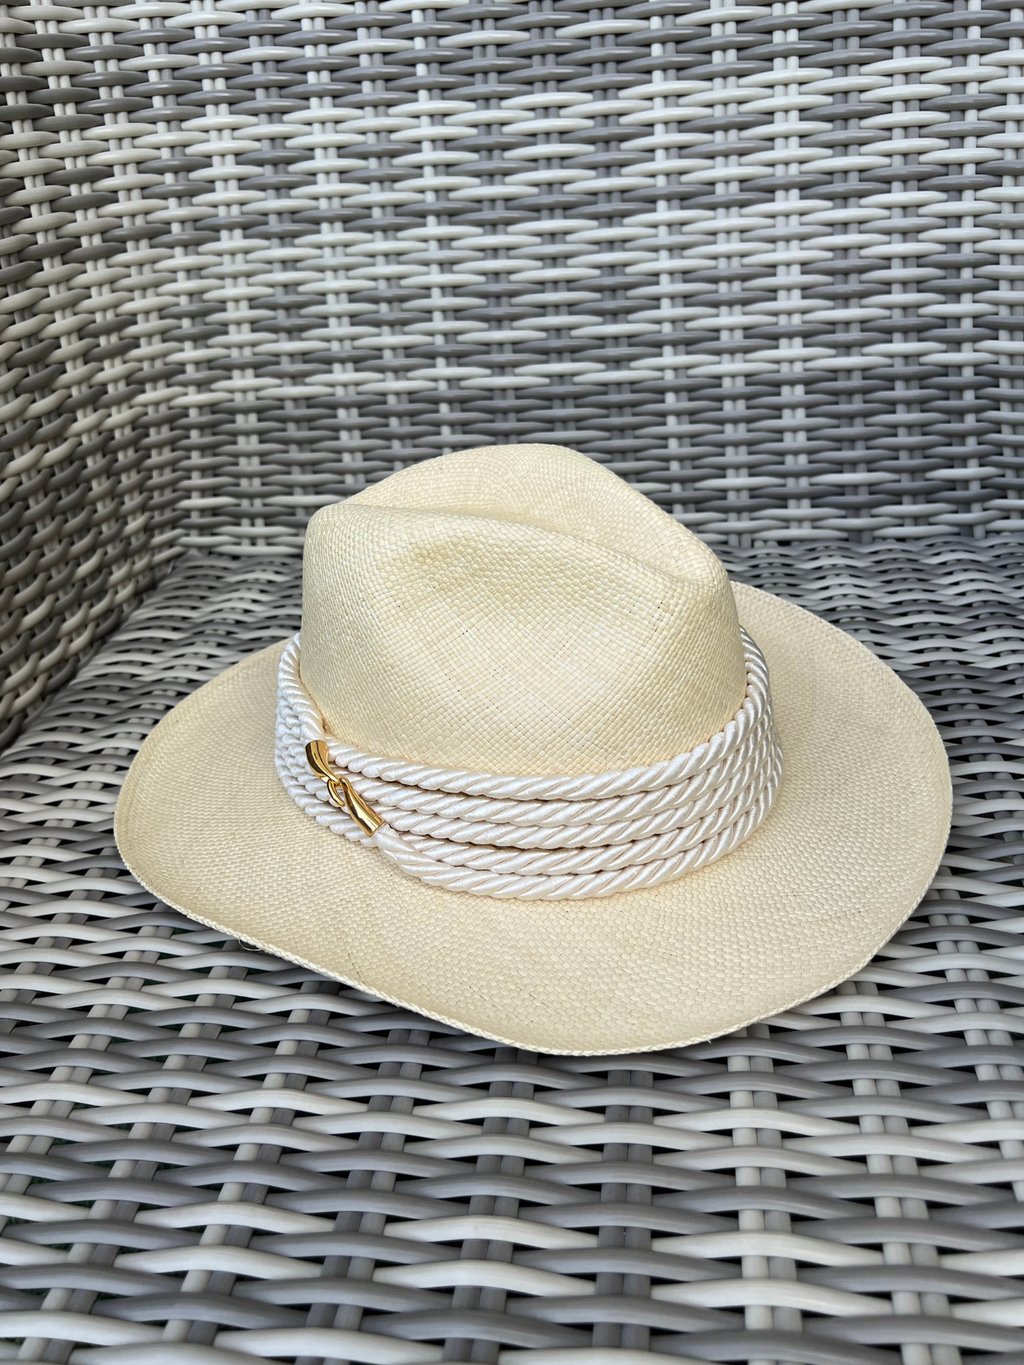 Boat Hat White